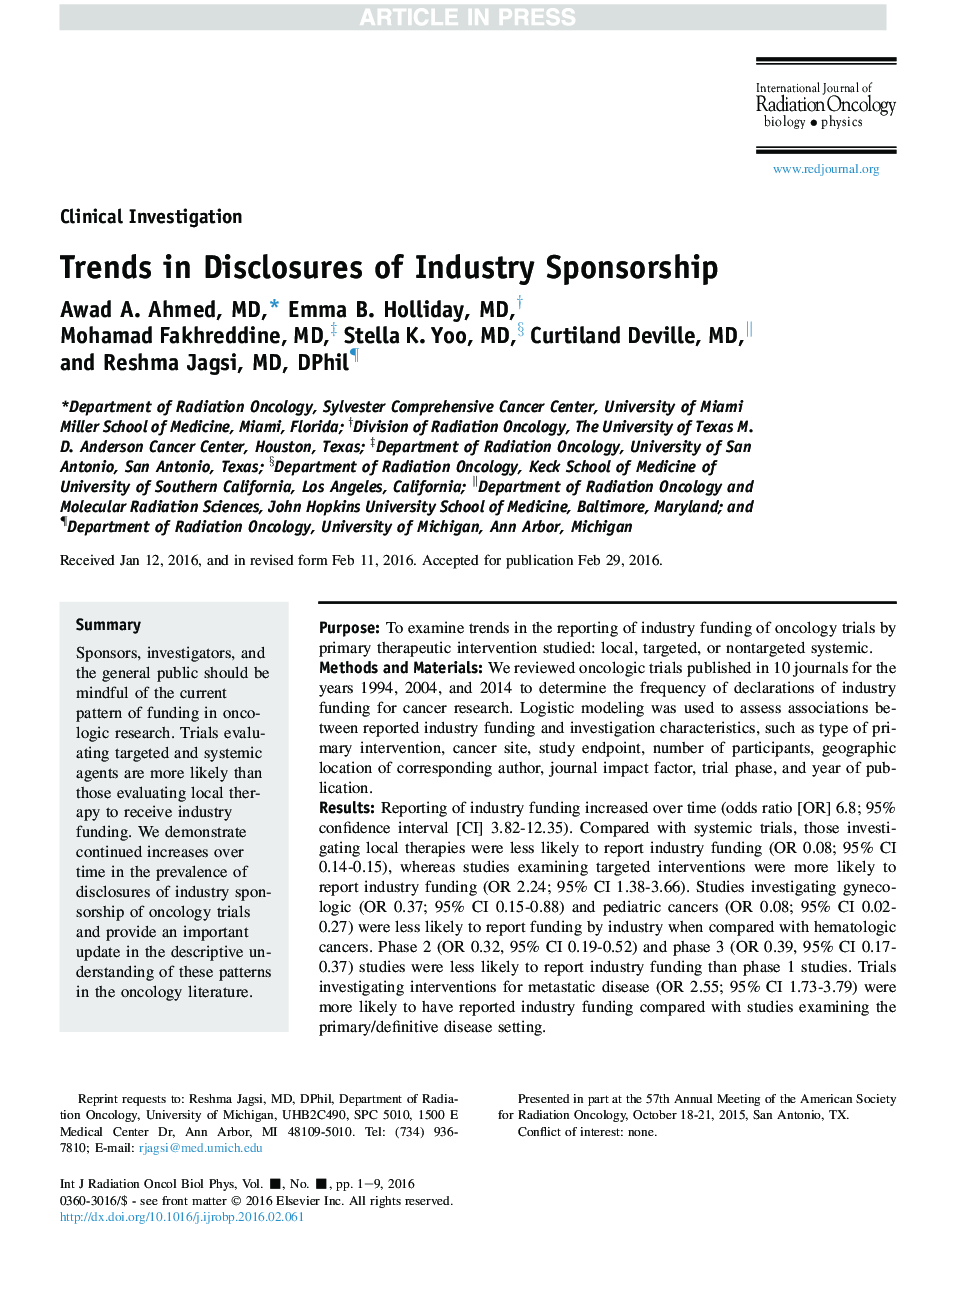 Trends in Disclosures of Industry Sponsorship